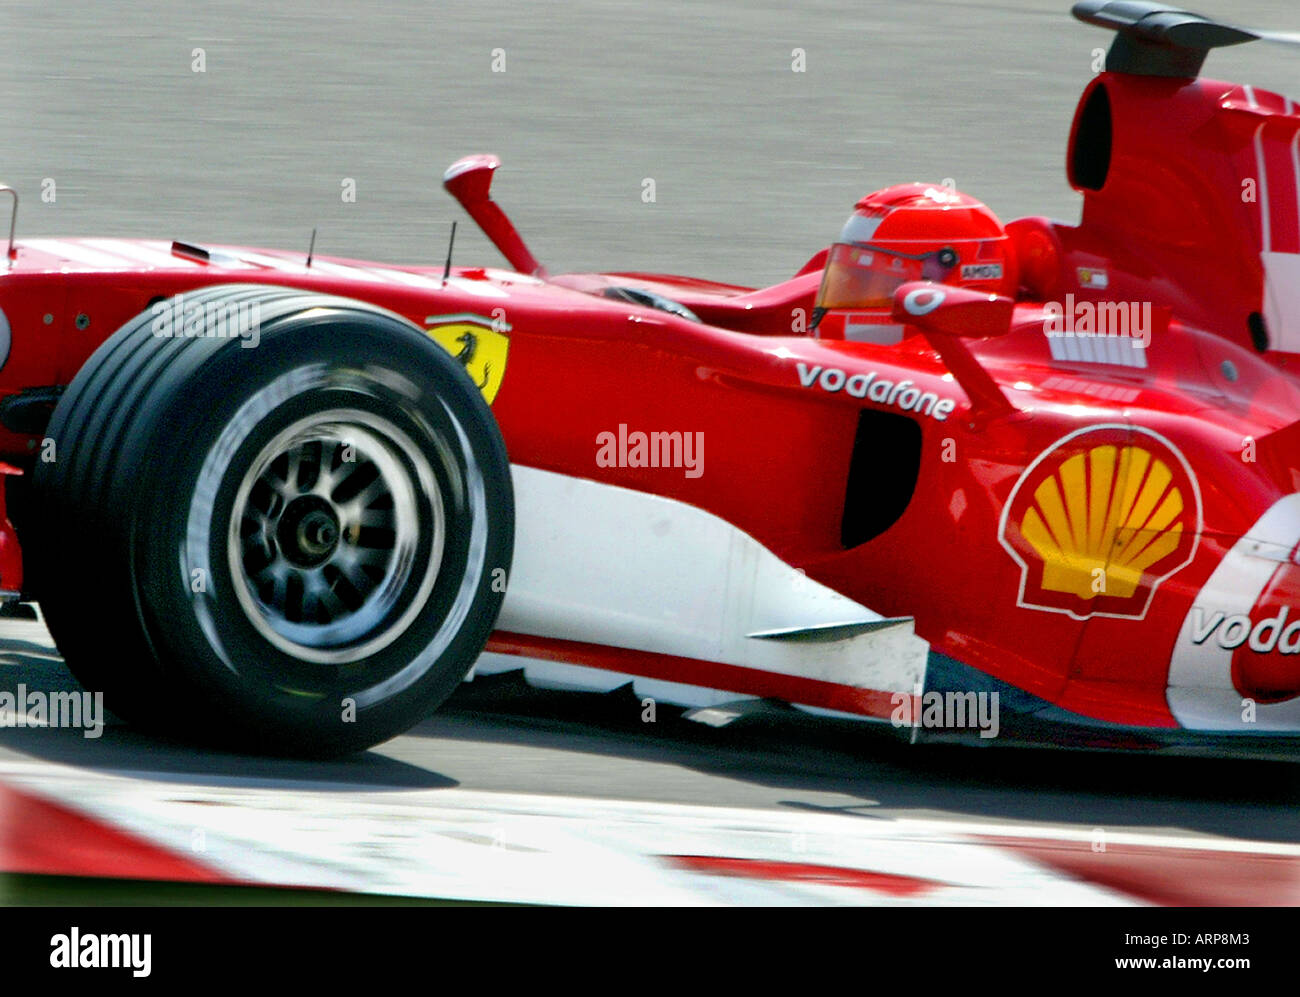 Michael Schumacher, seven times Formula One world champion, racing in the 2006 Ferrari Stock Photo